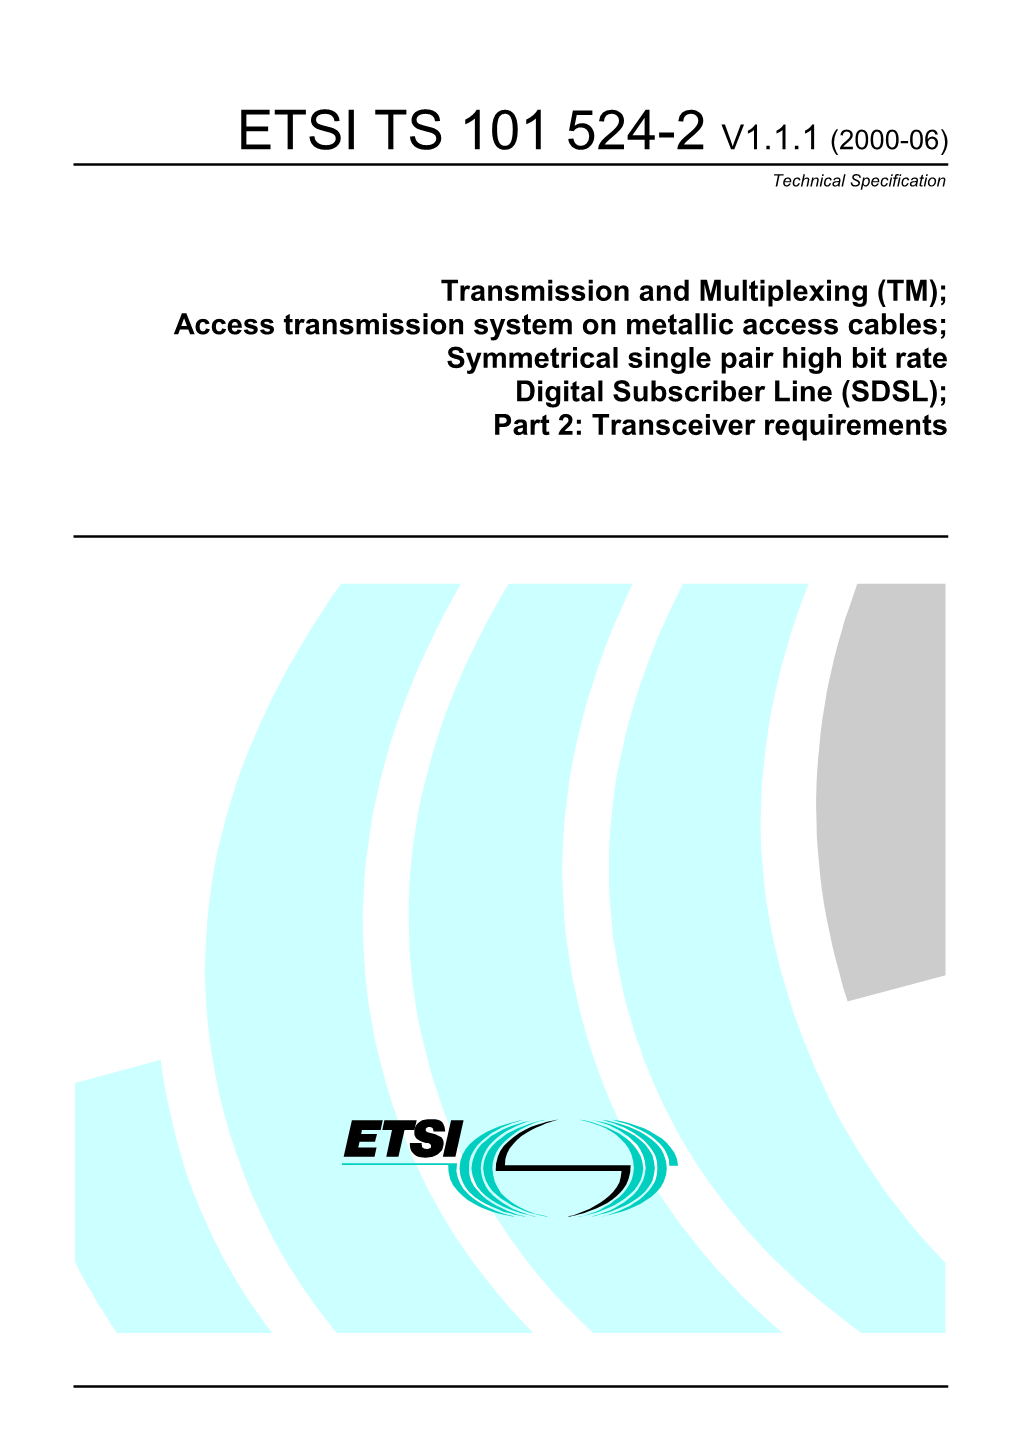 TS 101 524-2 V1.1.1 (2000-06) Technical Specification